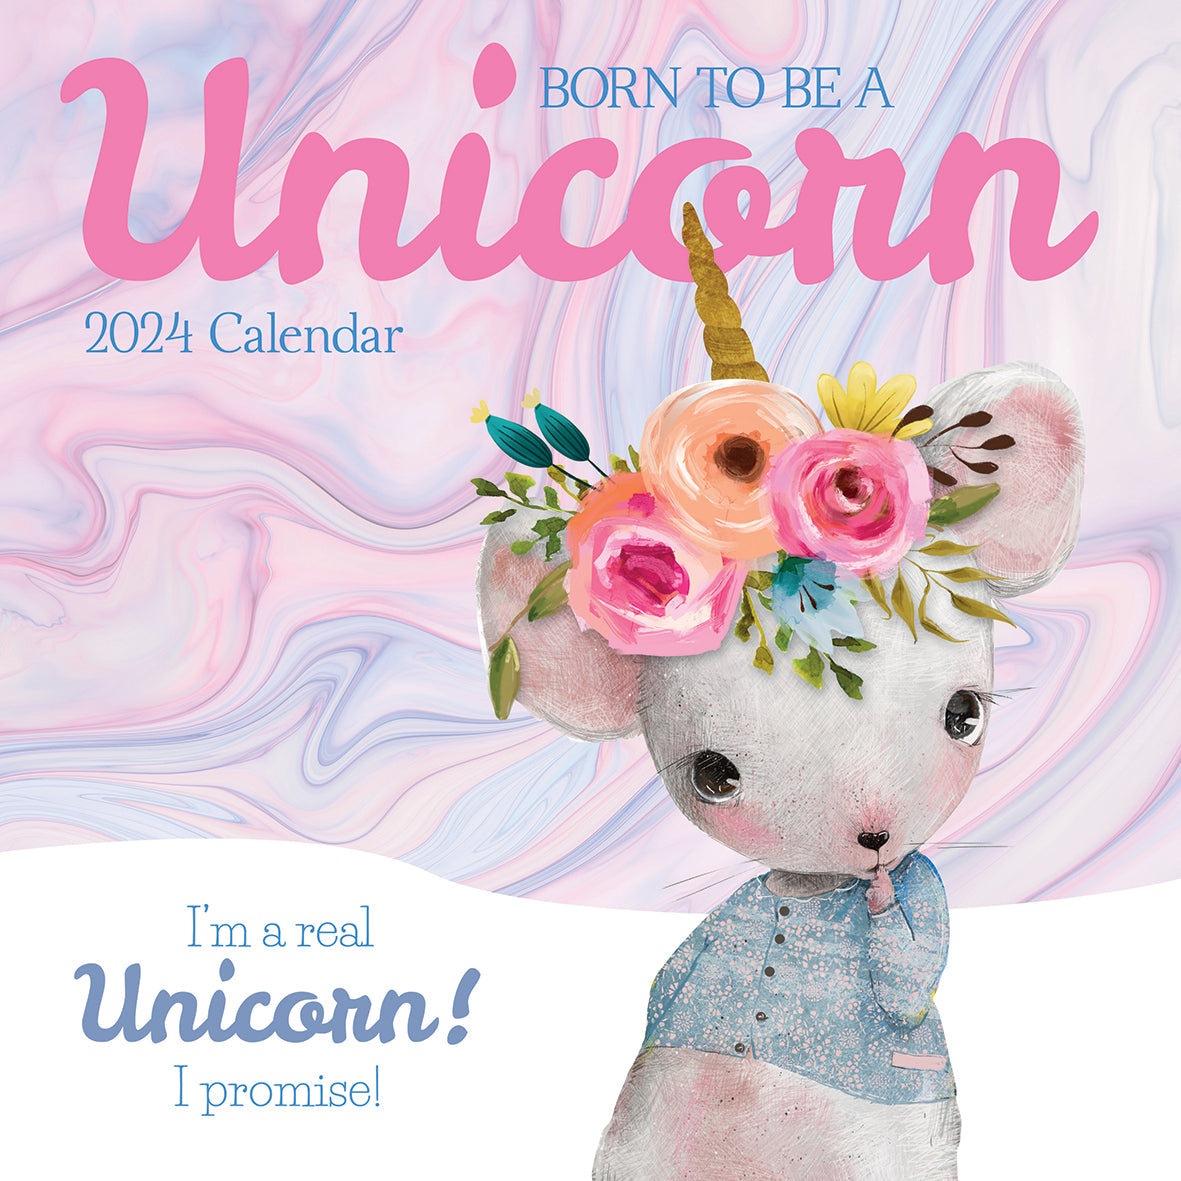 2024 Born to be a Unicorn Square Wall Calendar Motivational